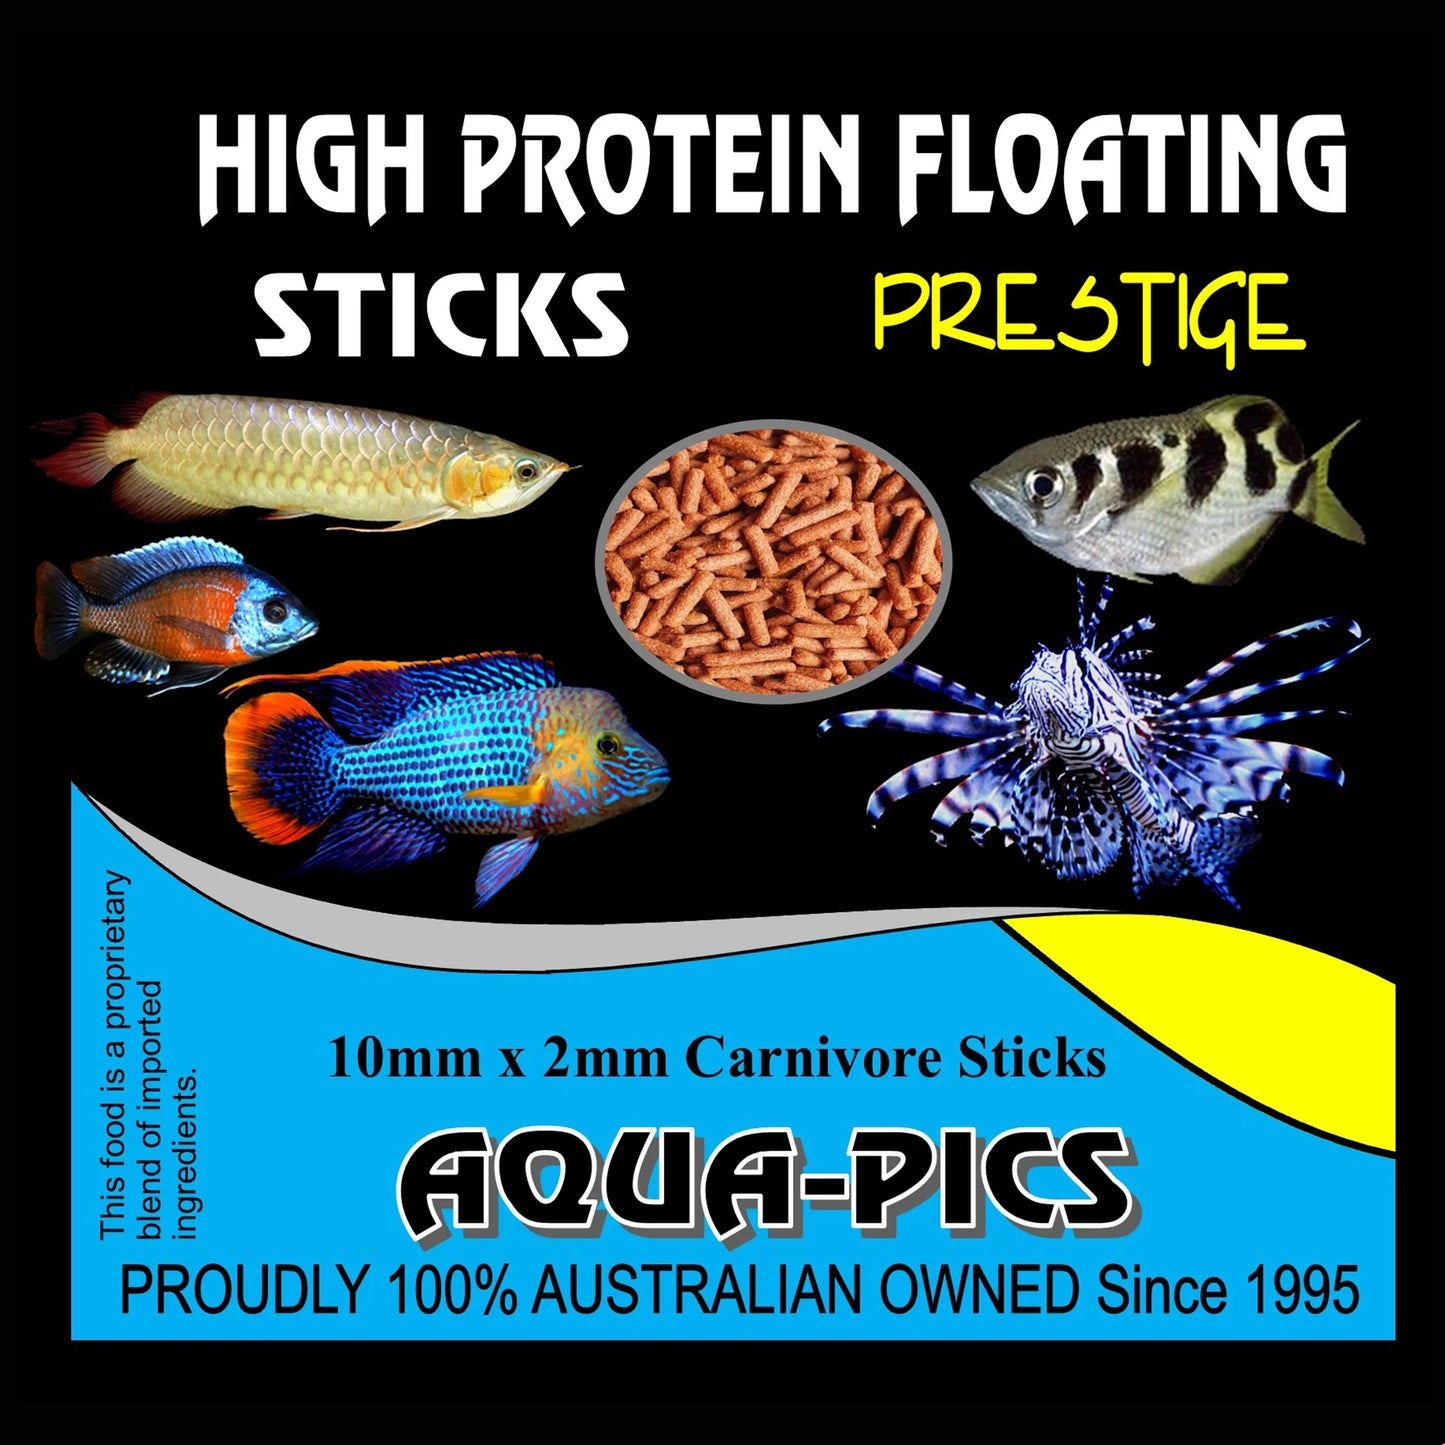 High Protein Floating Sticks 60g